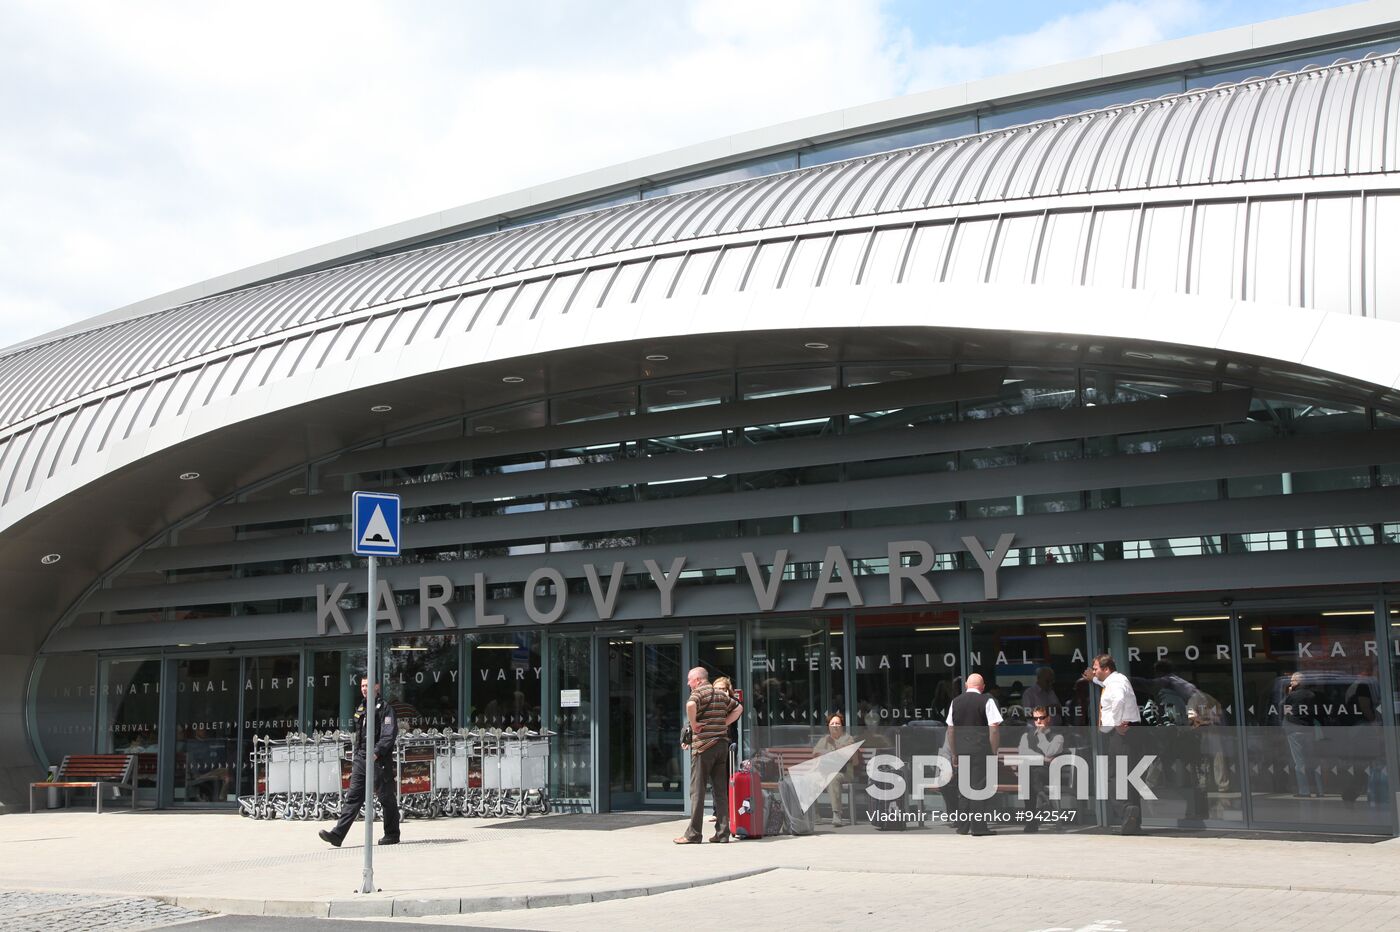 Karlovy Vary airport